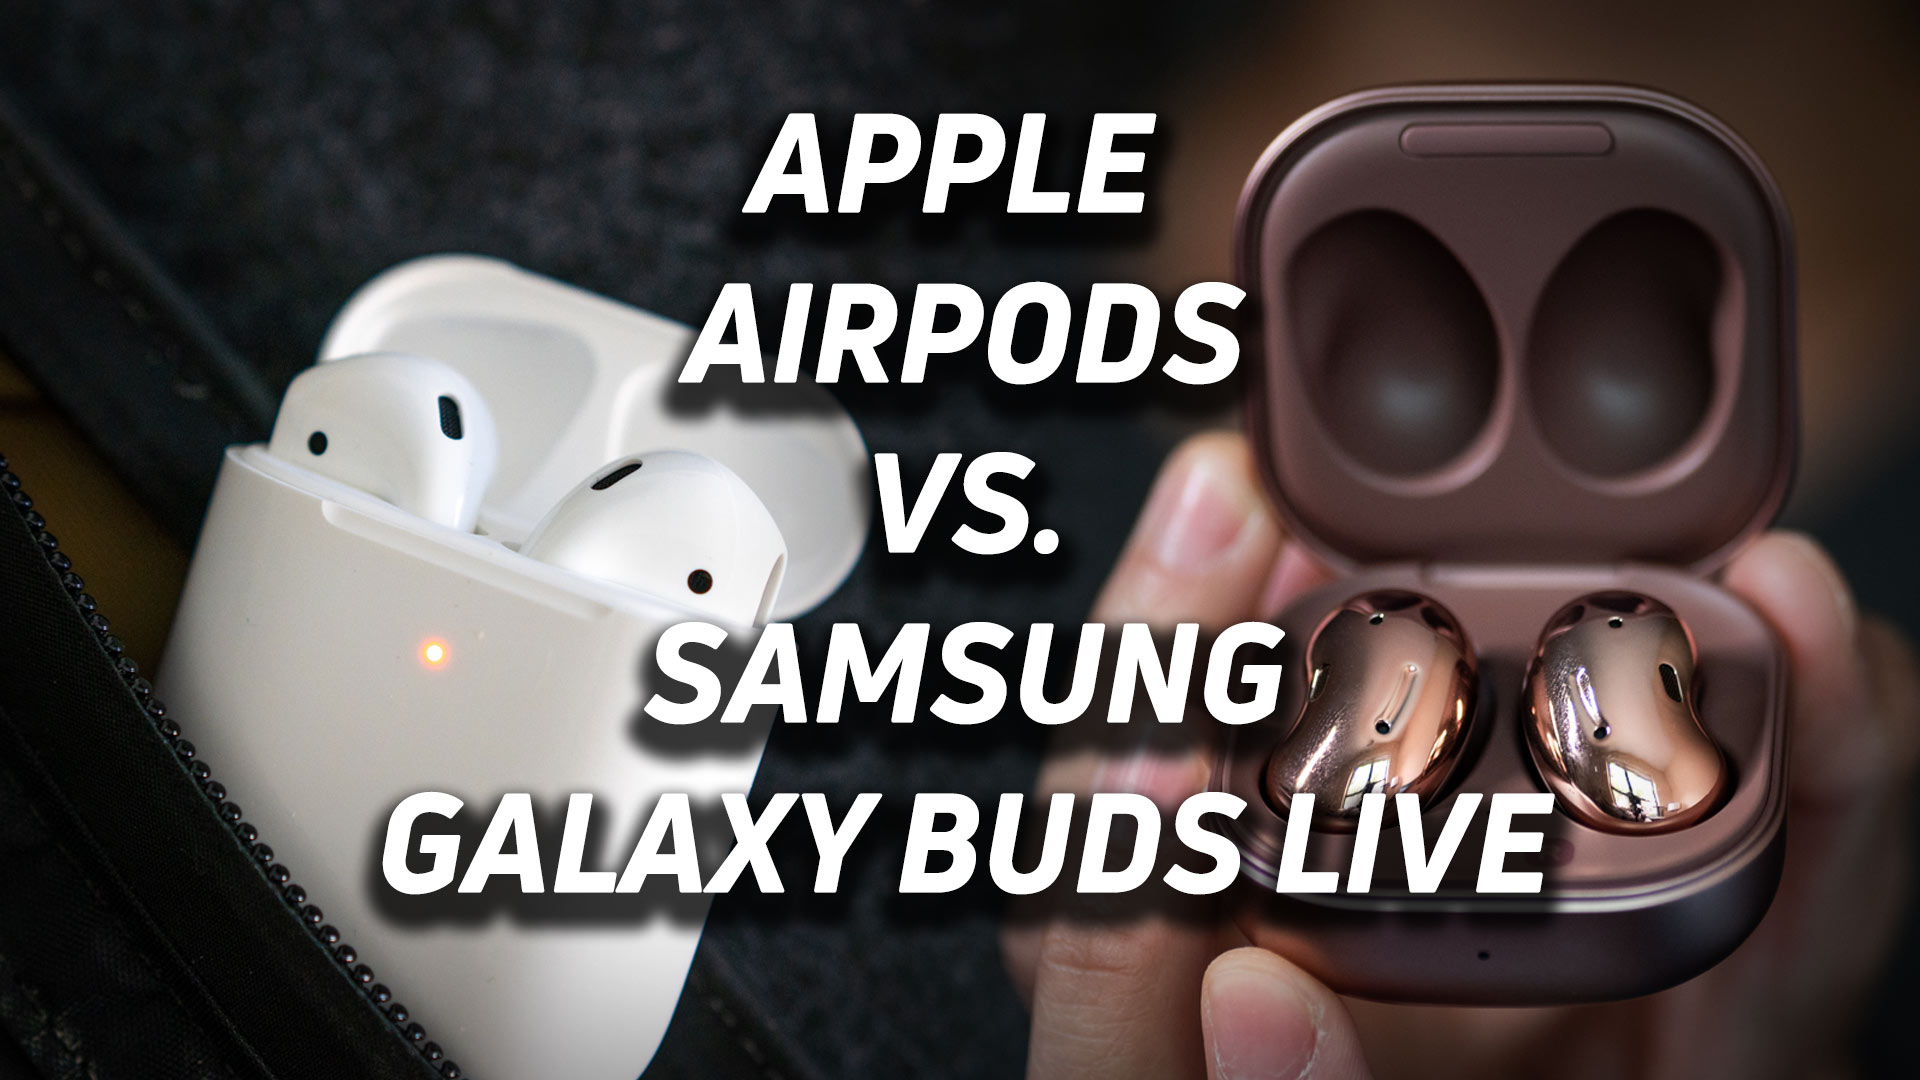 chef zege wasserette Apple AirPods vs Samsung Galaxy Buds Live - SoundGuys